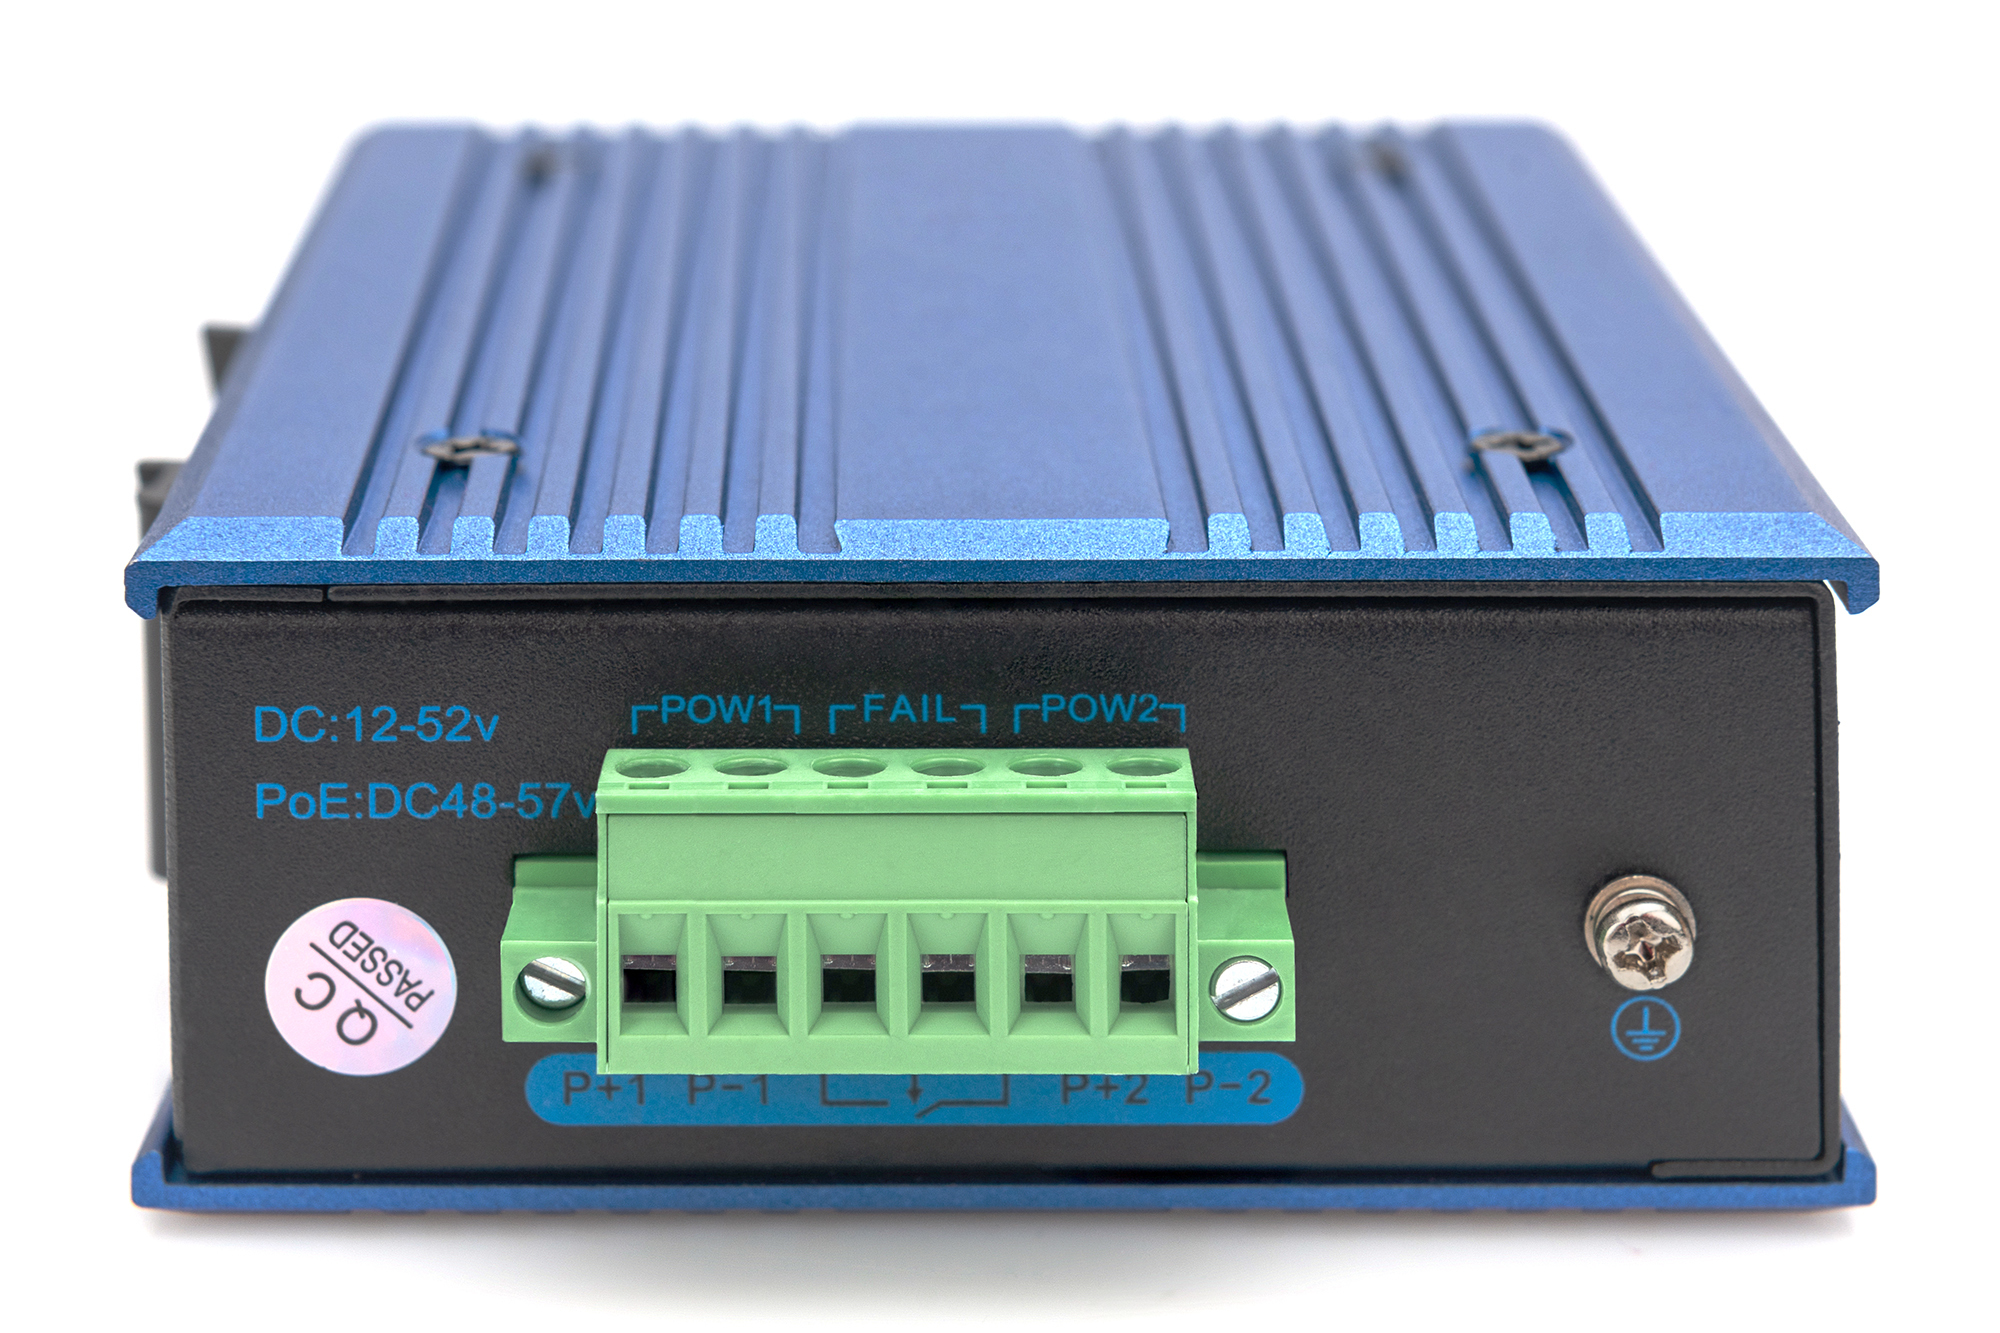 DIGITUS 4 Port Gigabit Ethernet Netzwerk PoE Switch, Industrial, Unmanaged, 1 SFP Uplink